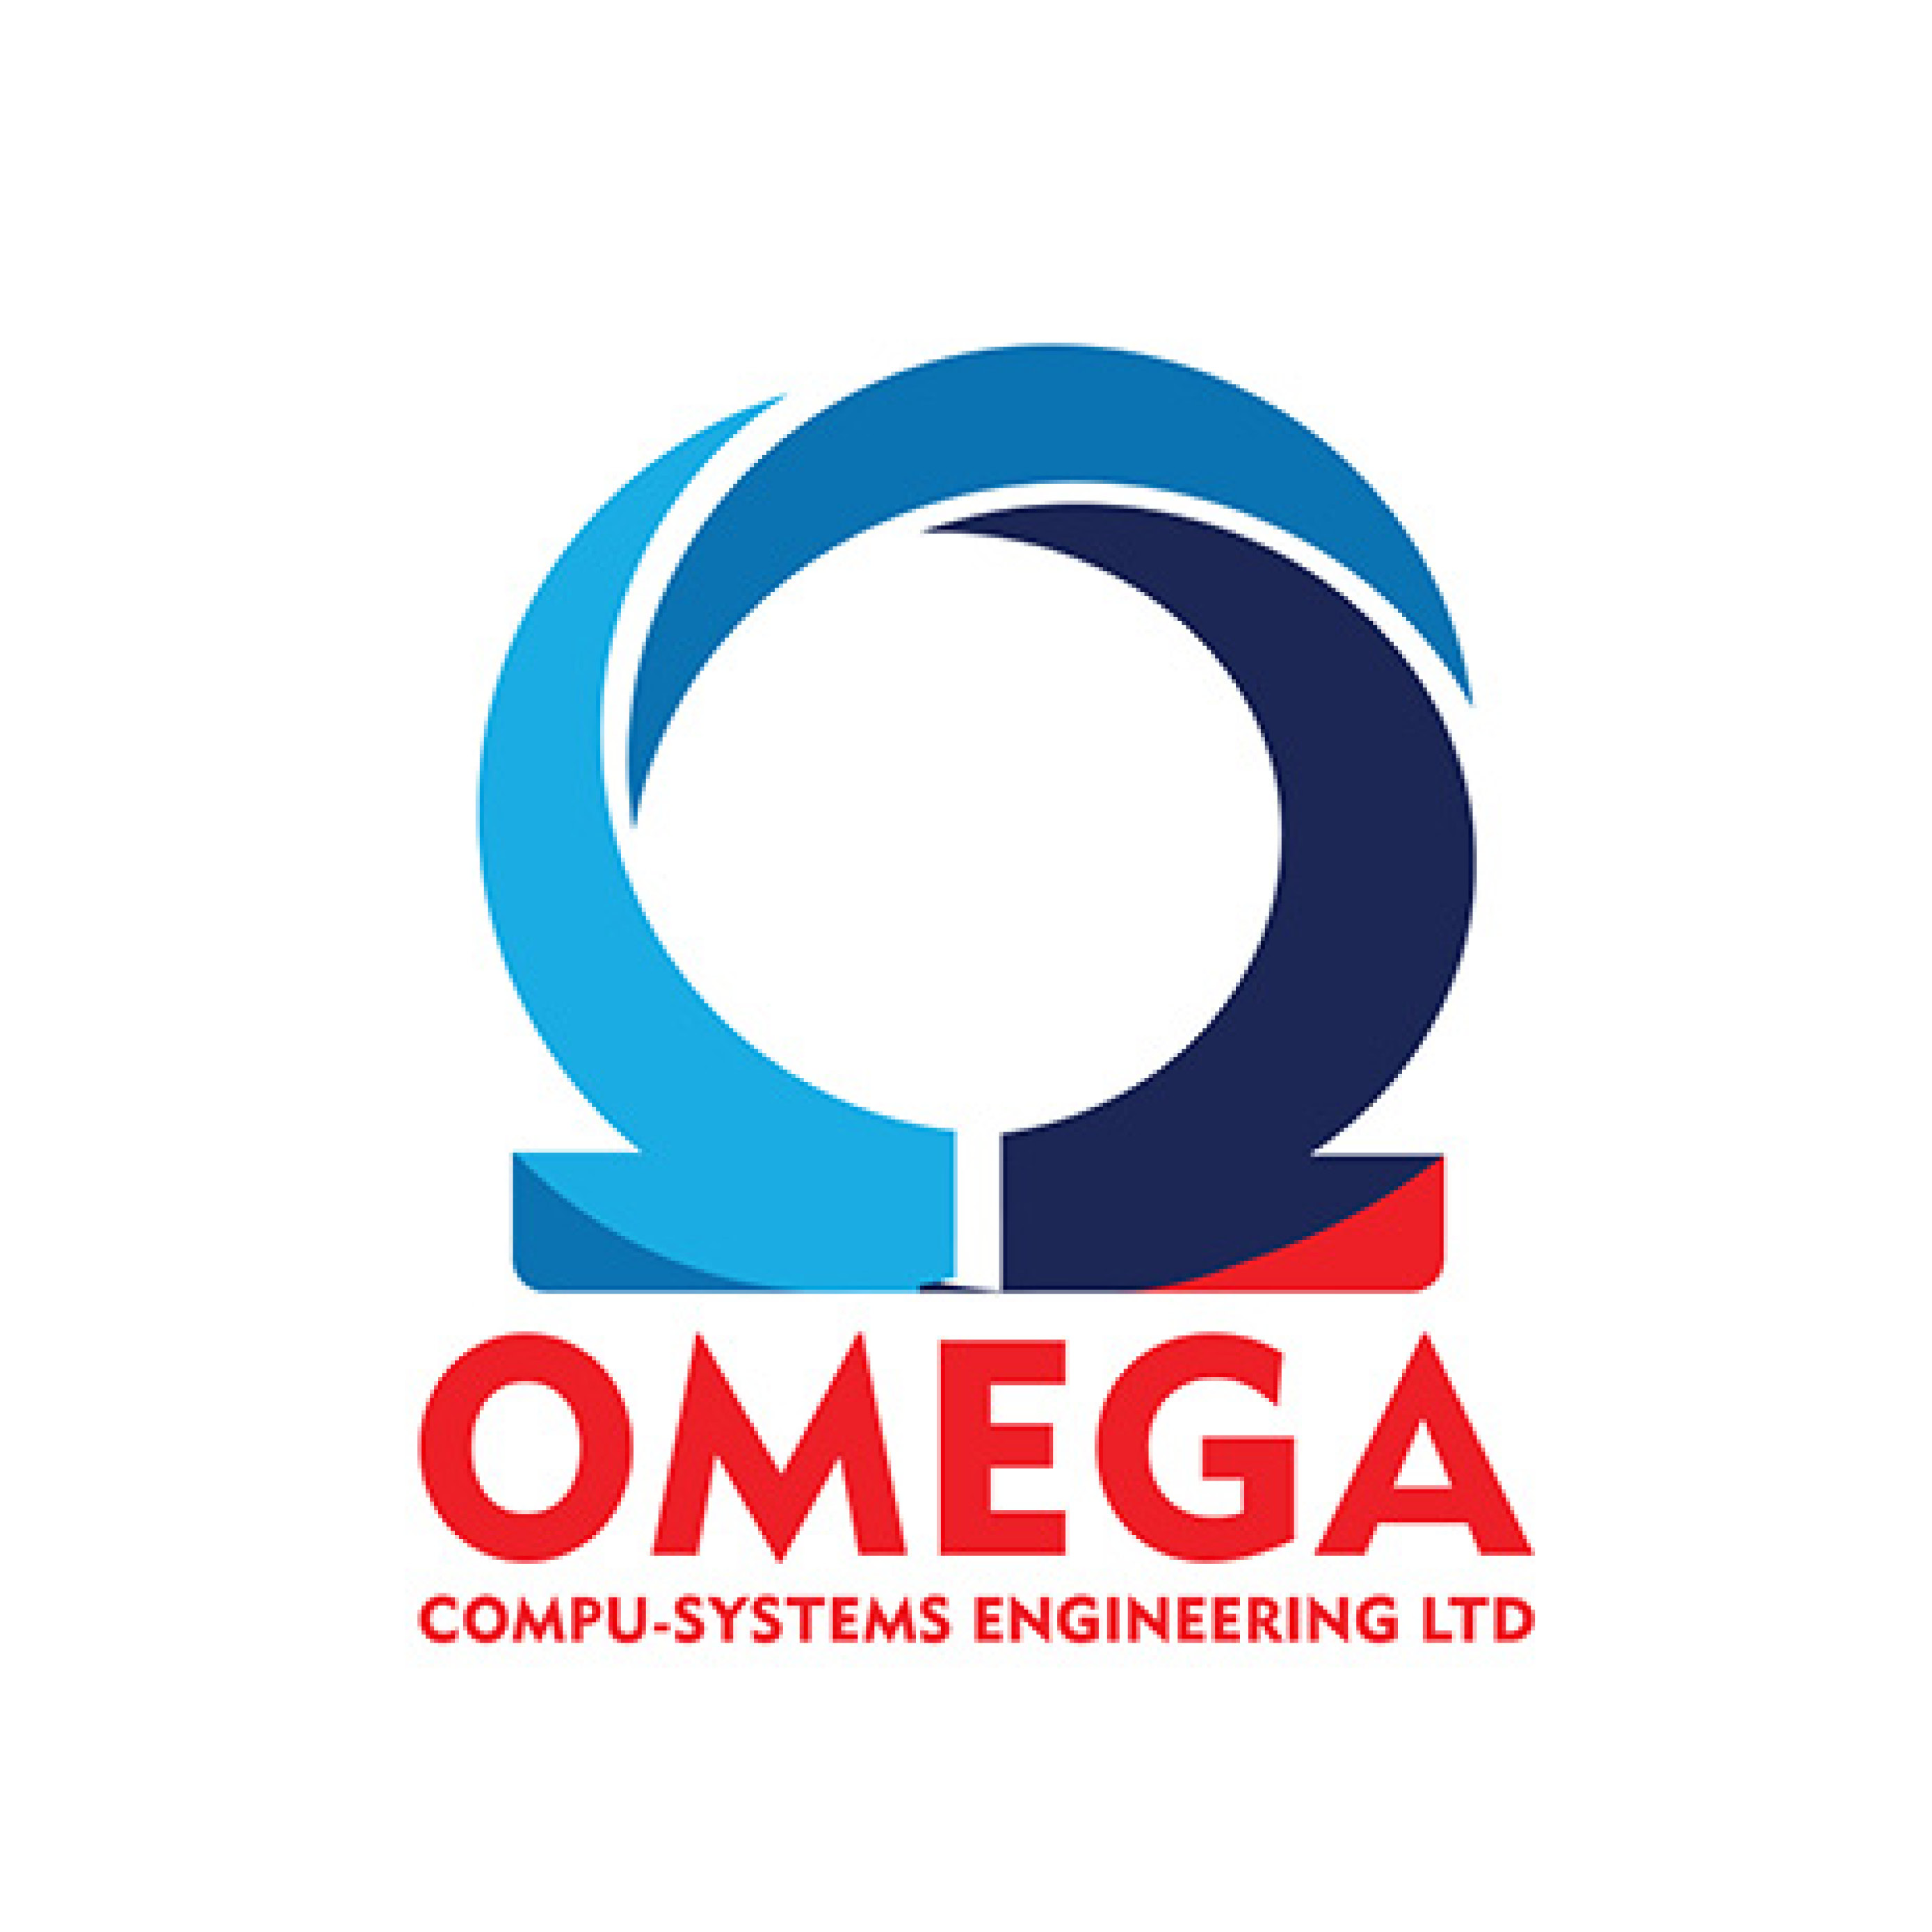 Omega Compu System Engineering Ltd